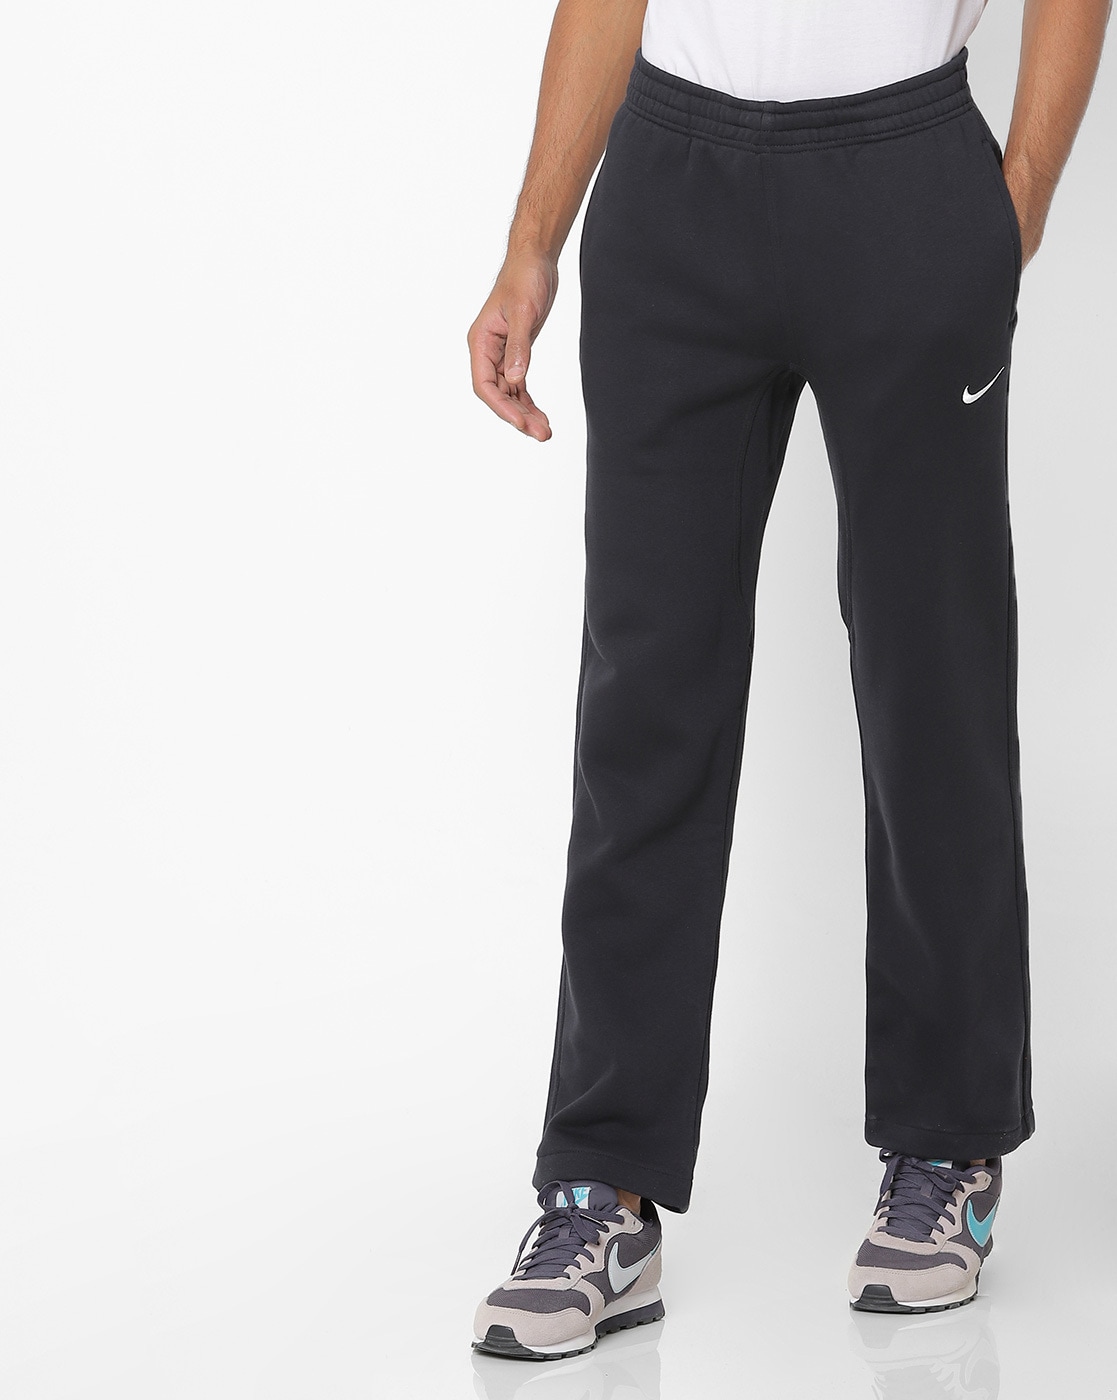  Nike Men's Sportswear Open Hem Club Pants, Black/White, X-Small  : Clothing, Shoes & Jewelry